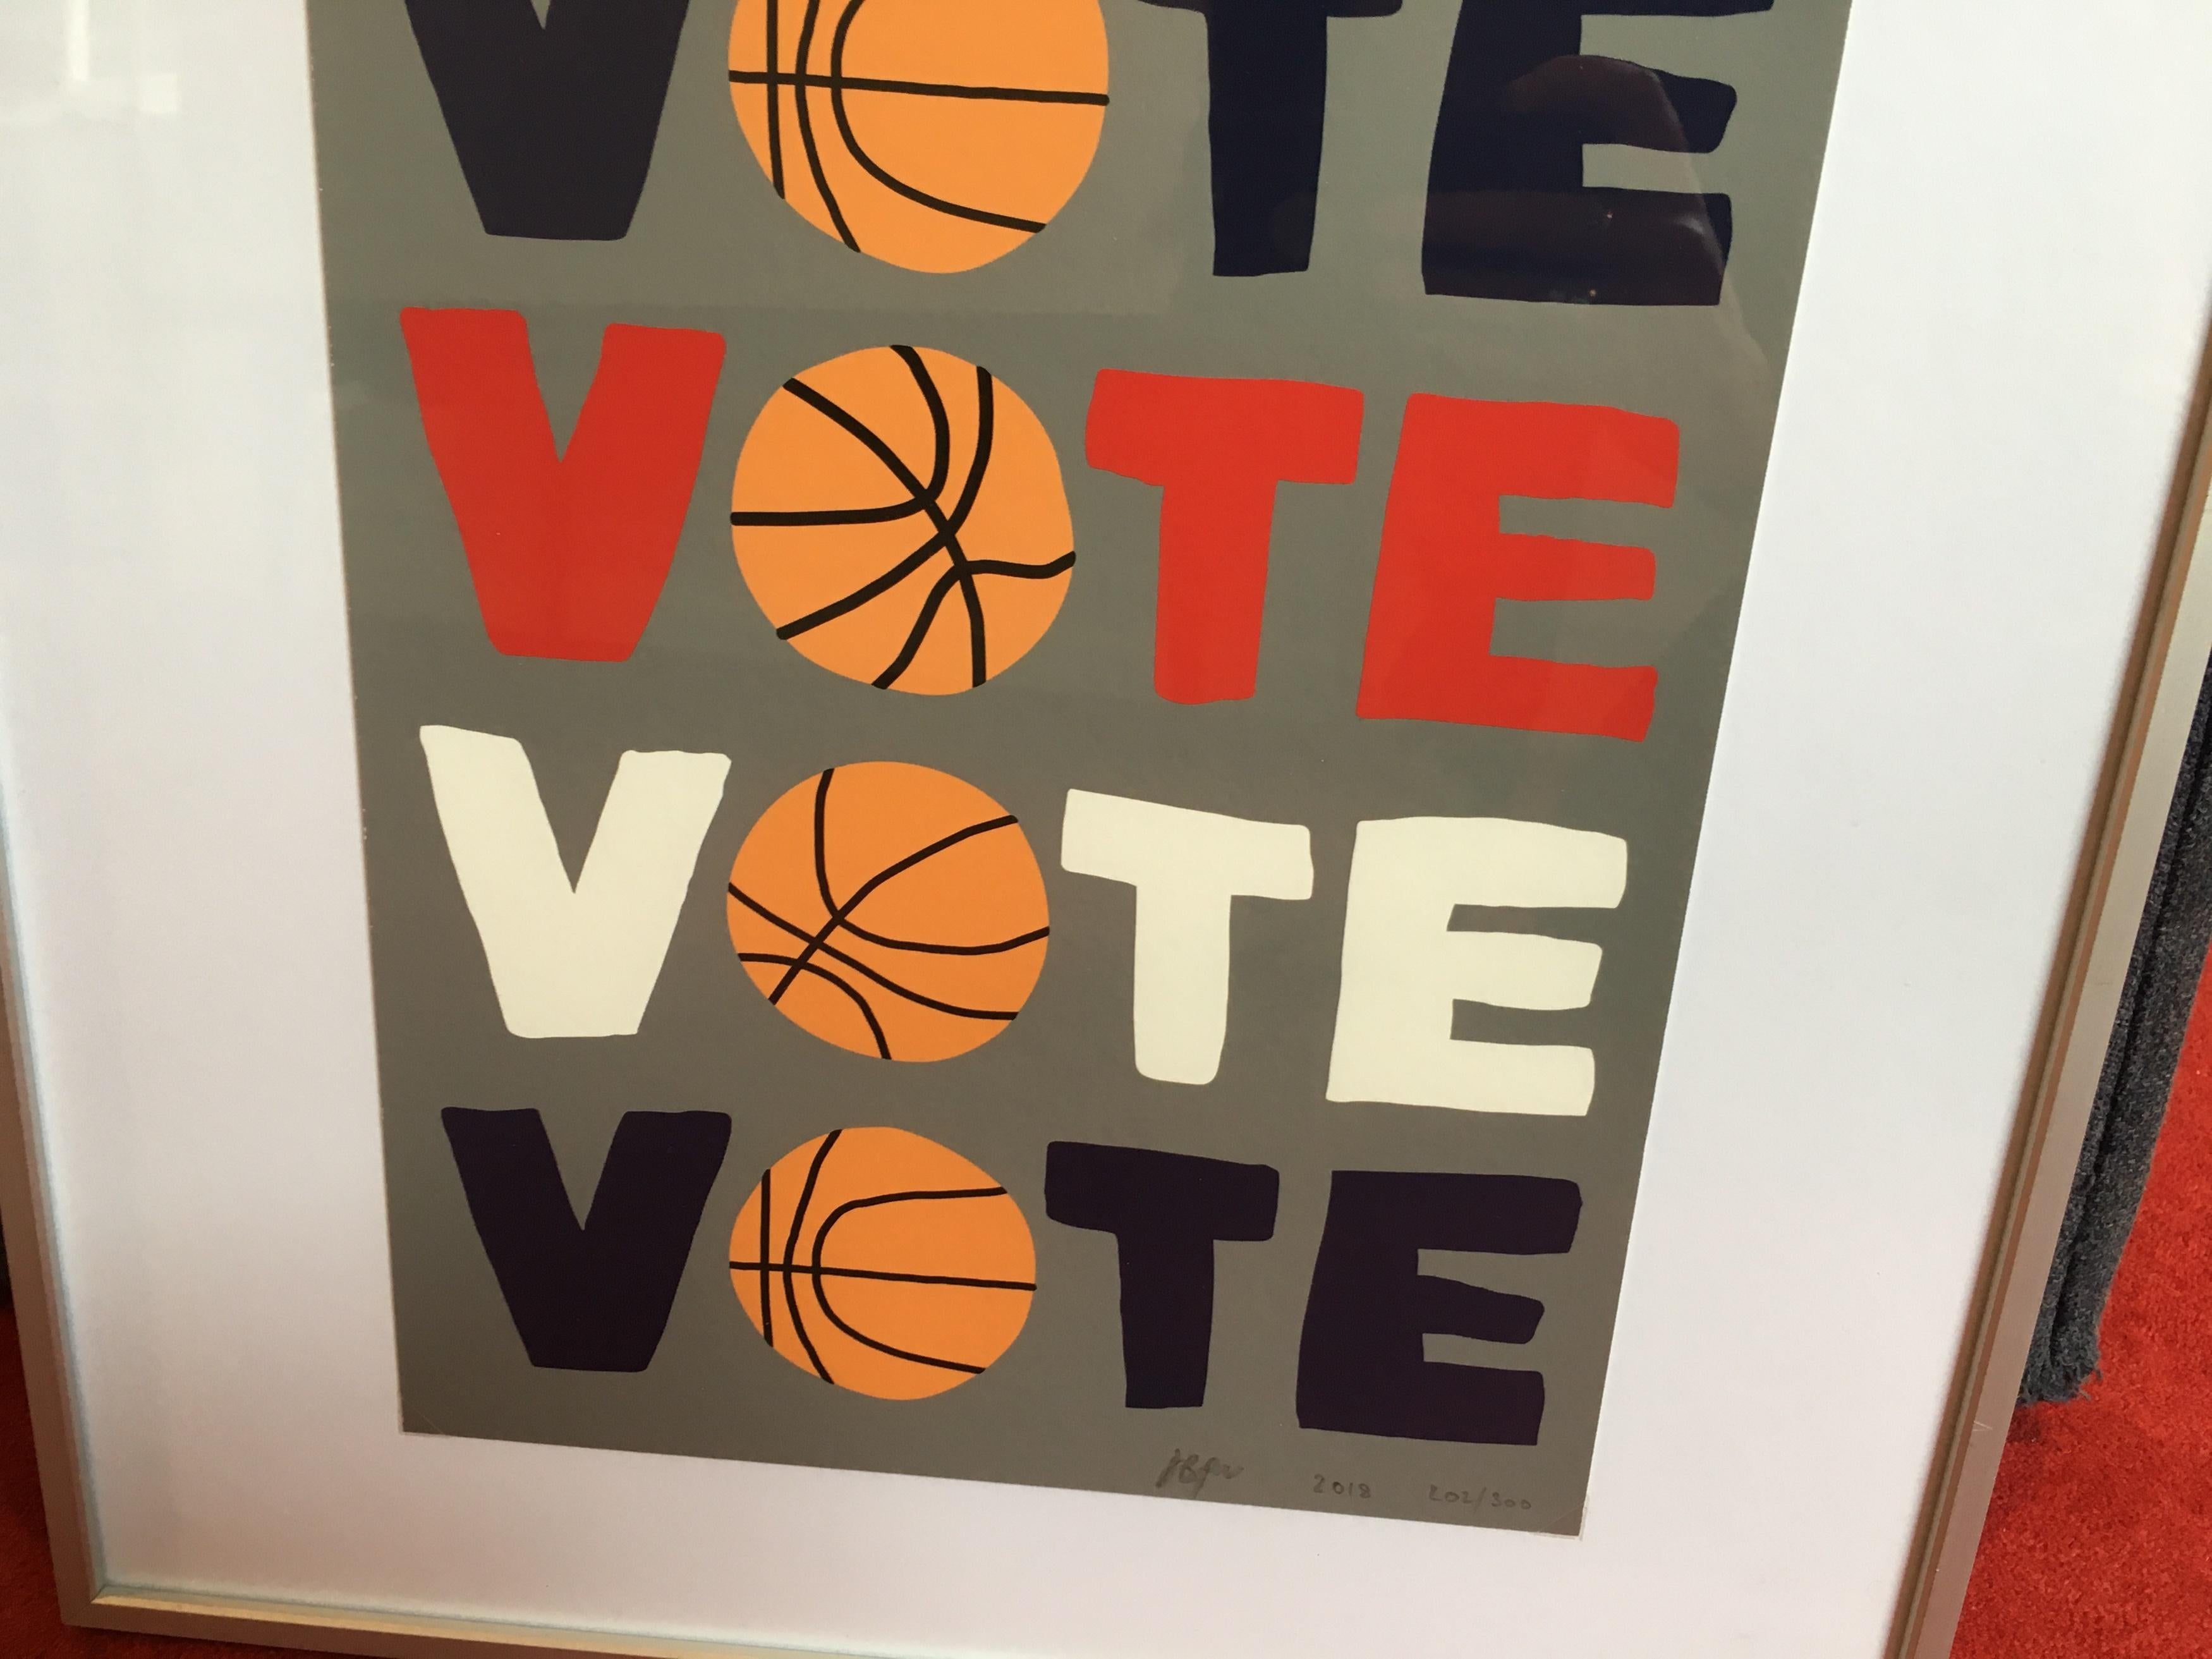 Vote, 2018, Limited Edition, Screenprint by Jonas wood - Gray Figurative Print by Jonas Wood